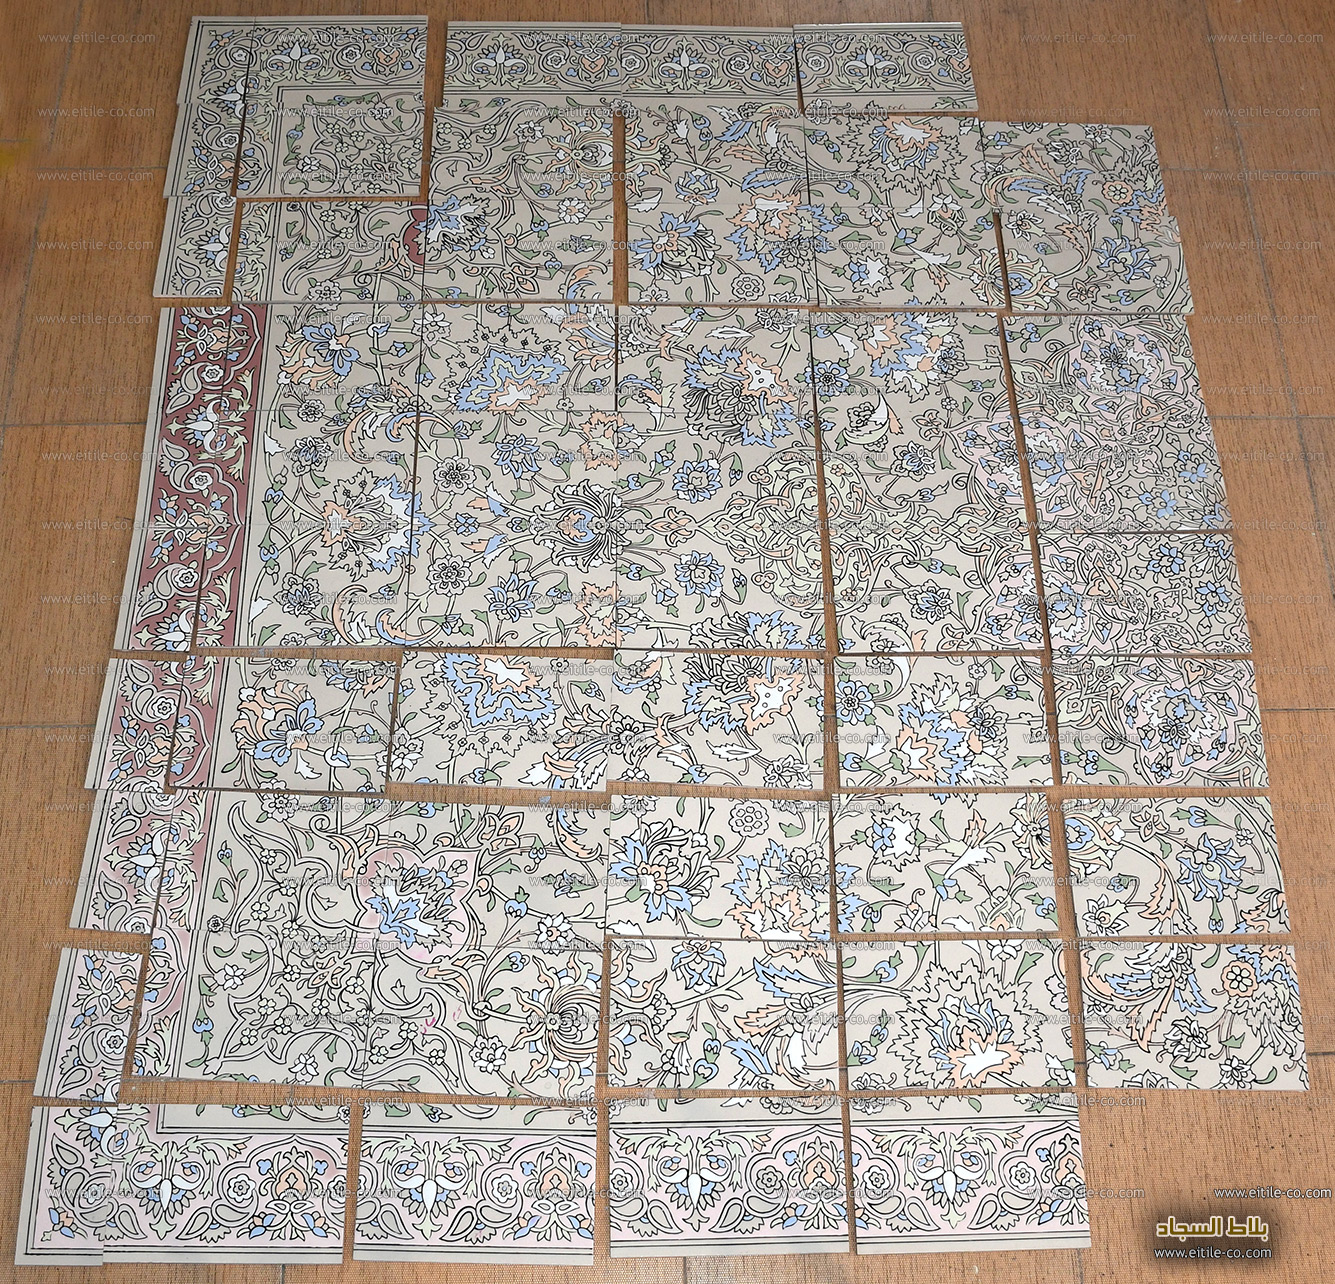 Handmade floor ceramic supplier, www.eitile.com